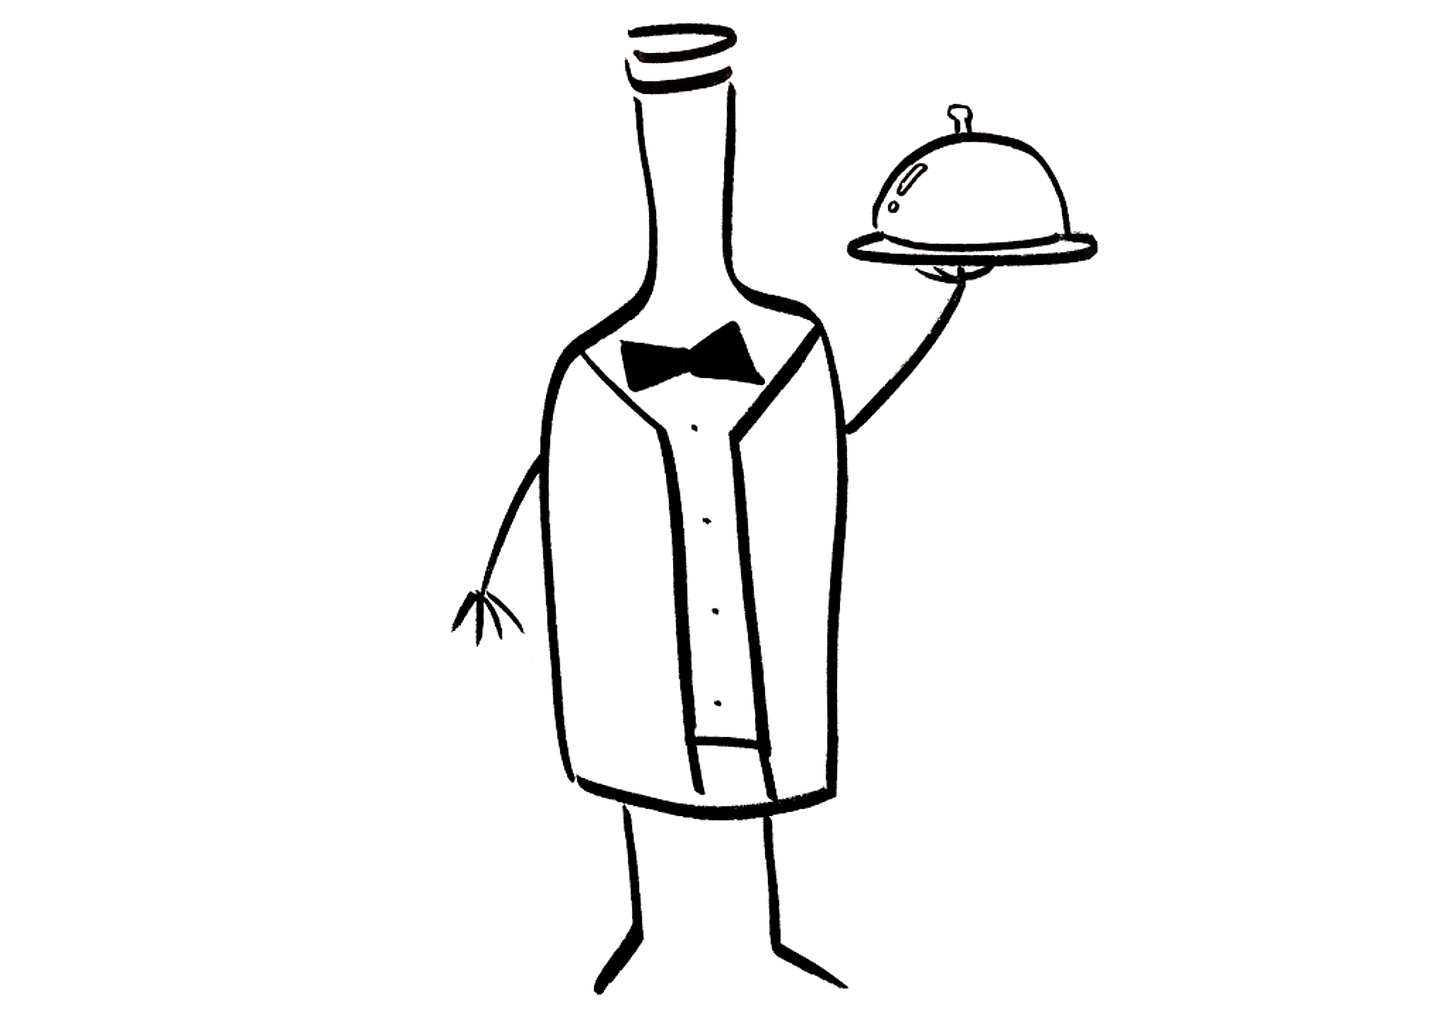 An anthropomorphic wine bottle dressed as a restaurant server